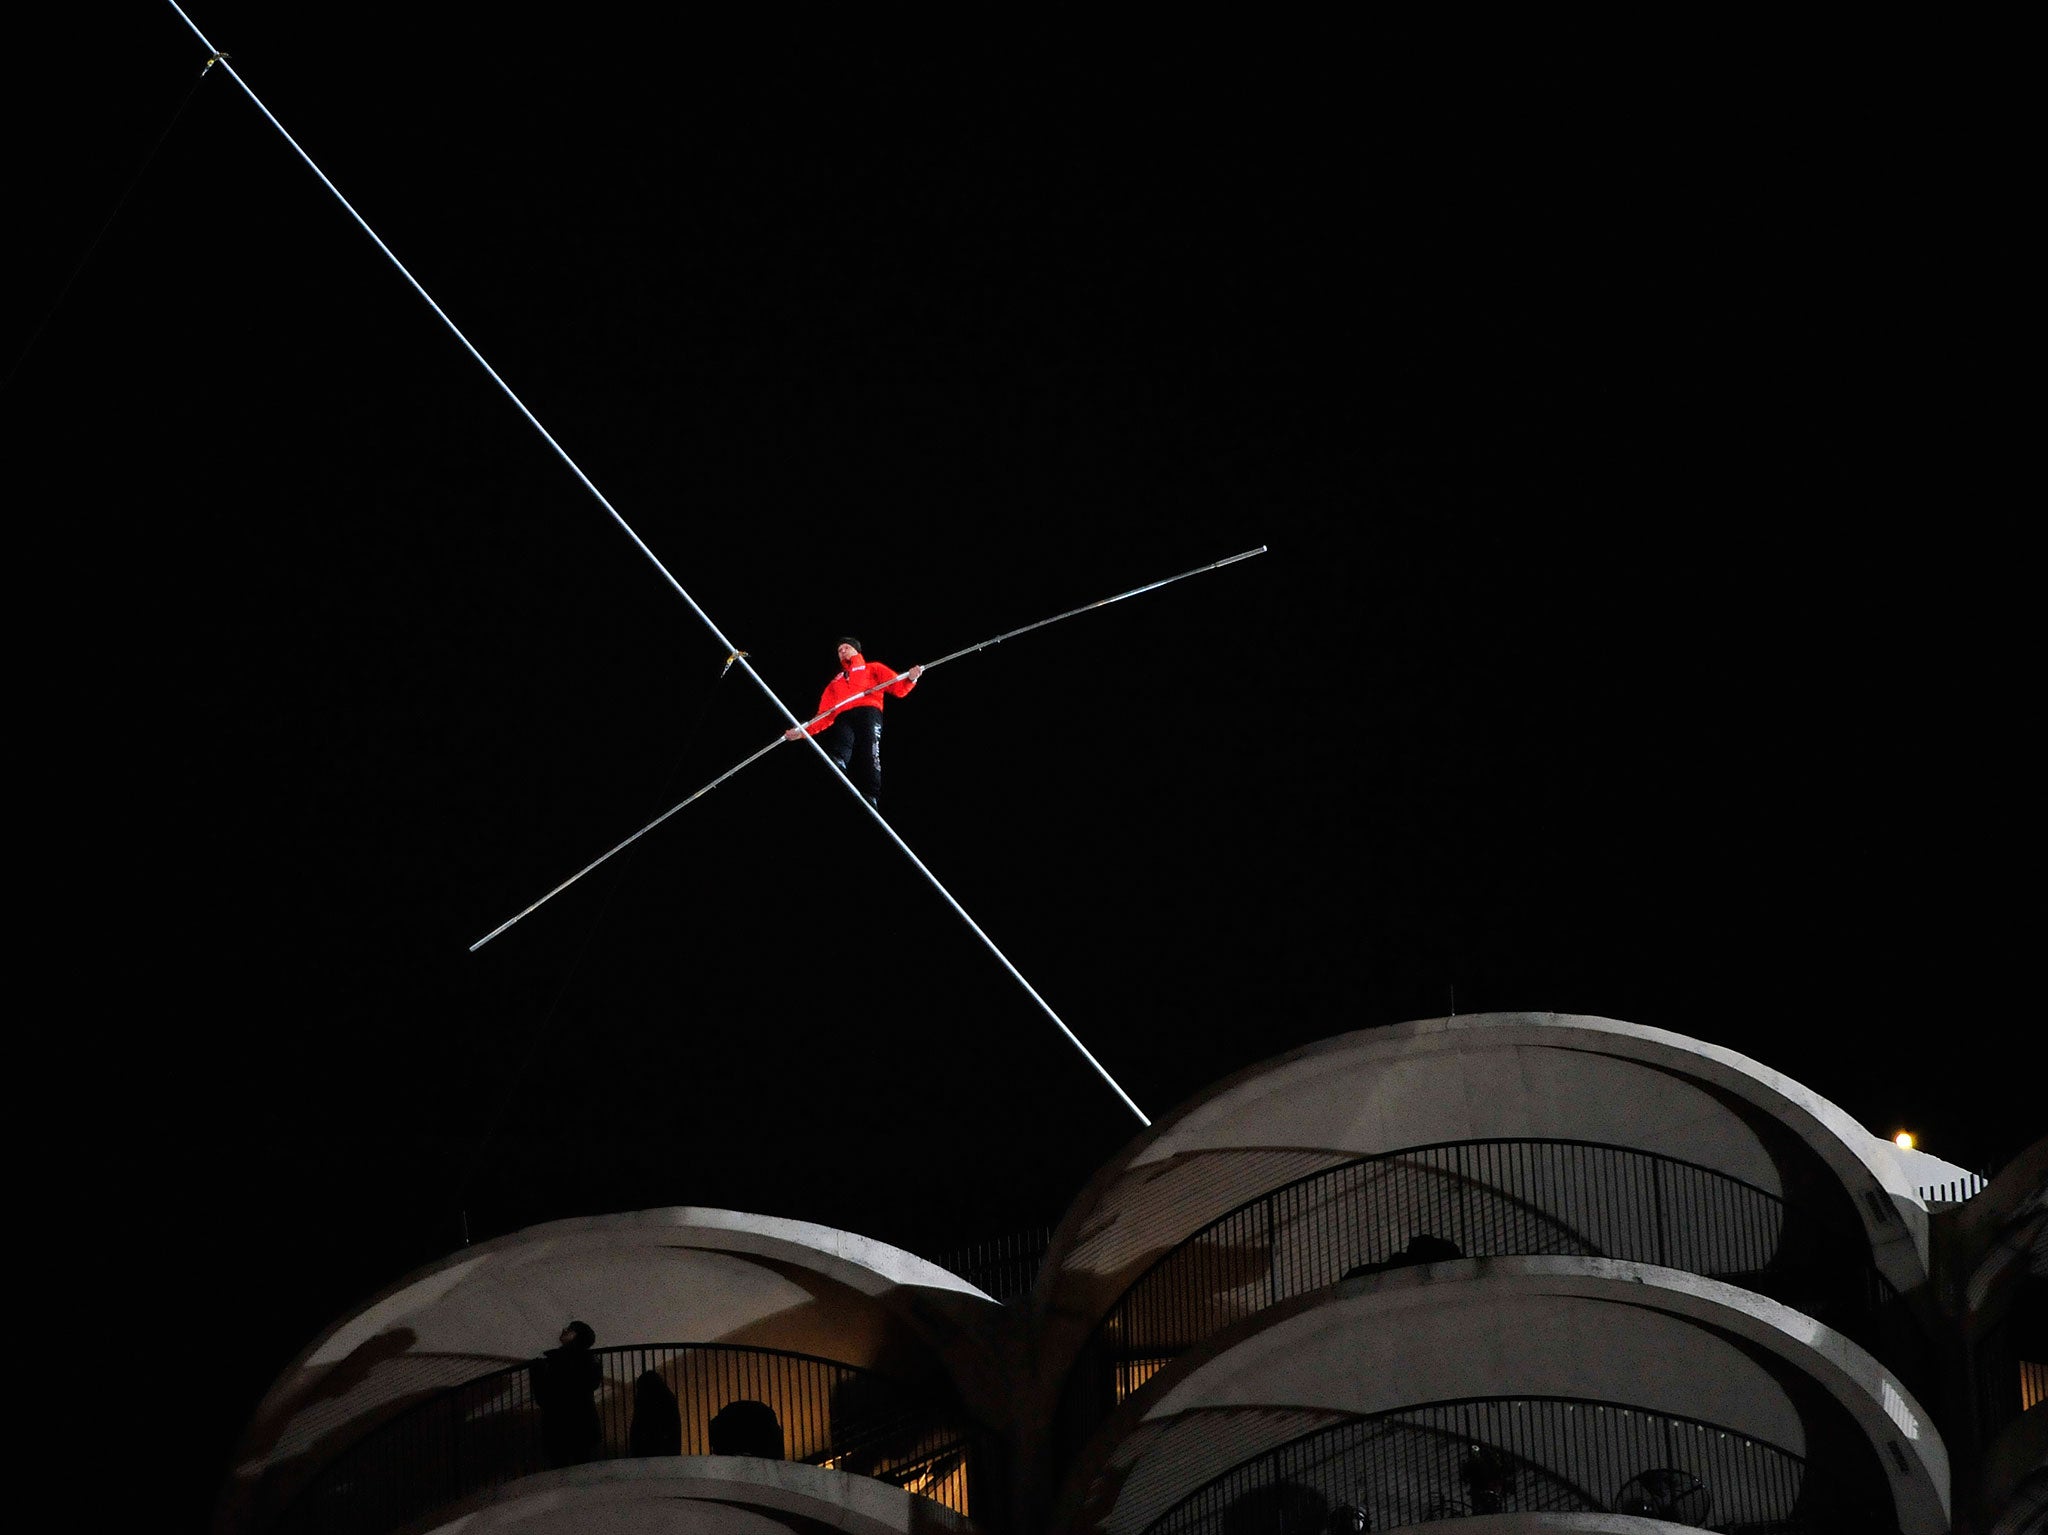 Daredevil Nik Wallenda walks a tightrope between buildings on November 2, 2014 in Chicago, Illinois.